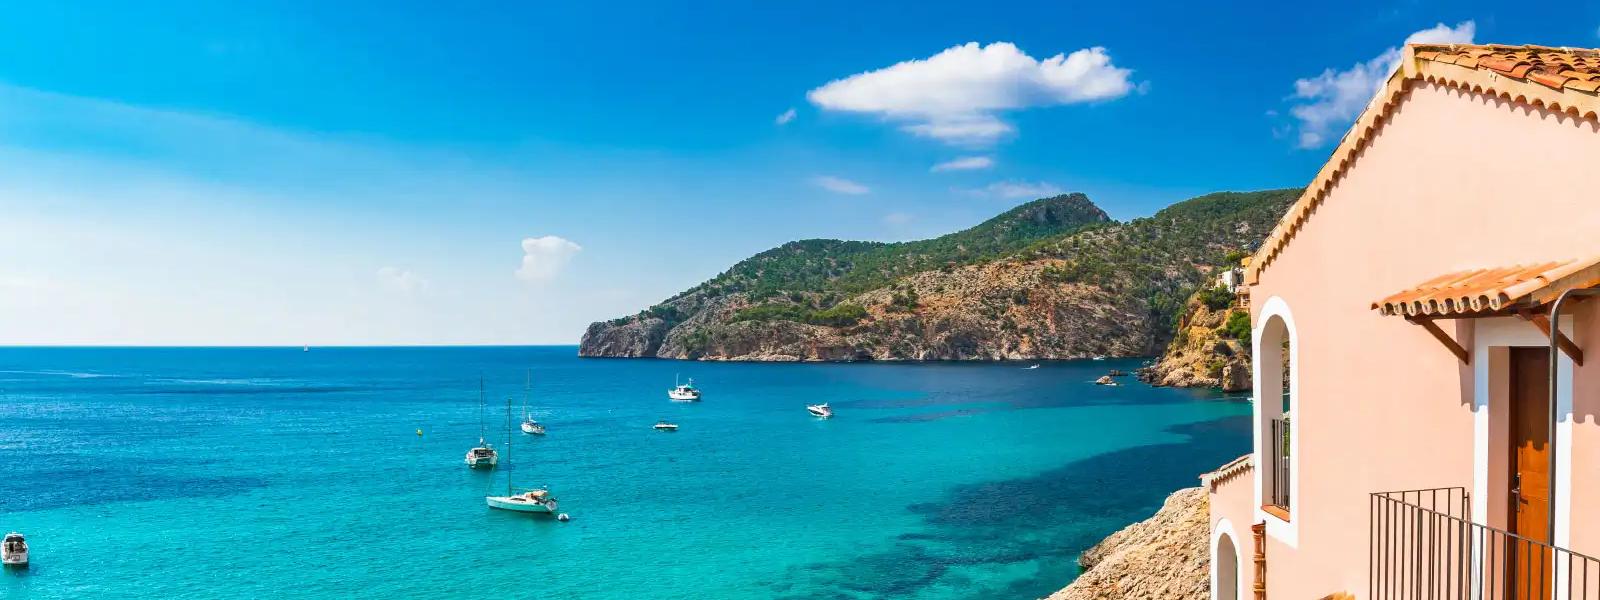 Ferienhäuser am Meer in Kroatien: Strandurlaub im Ferienhaus - e-domizil